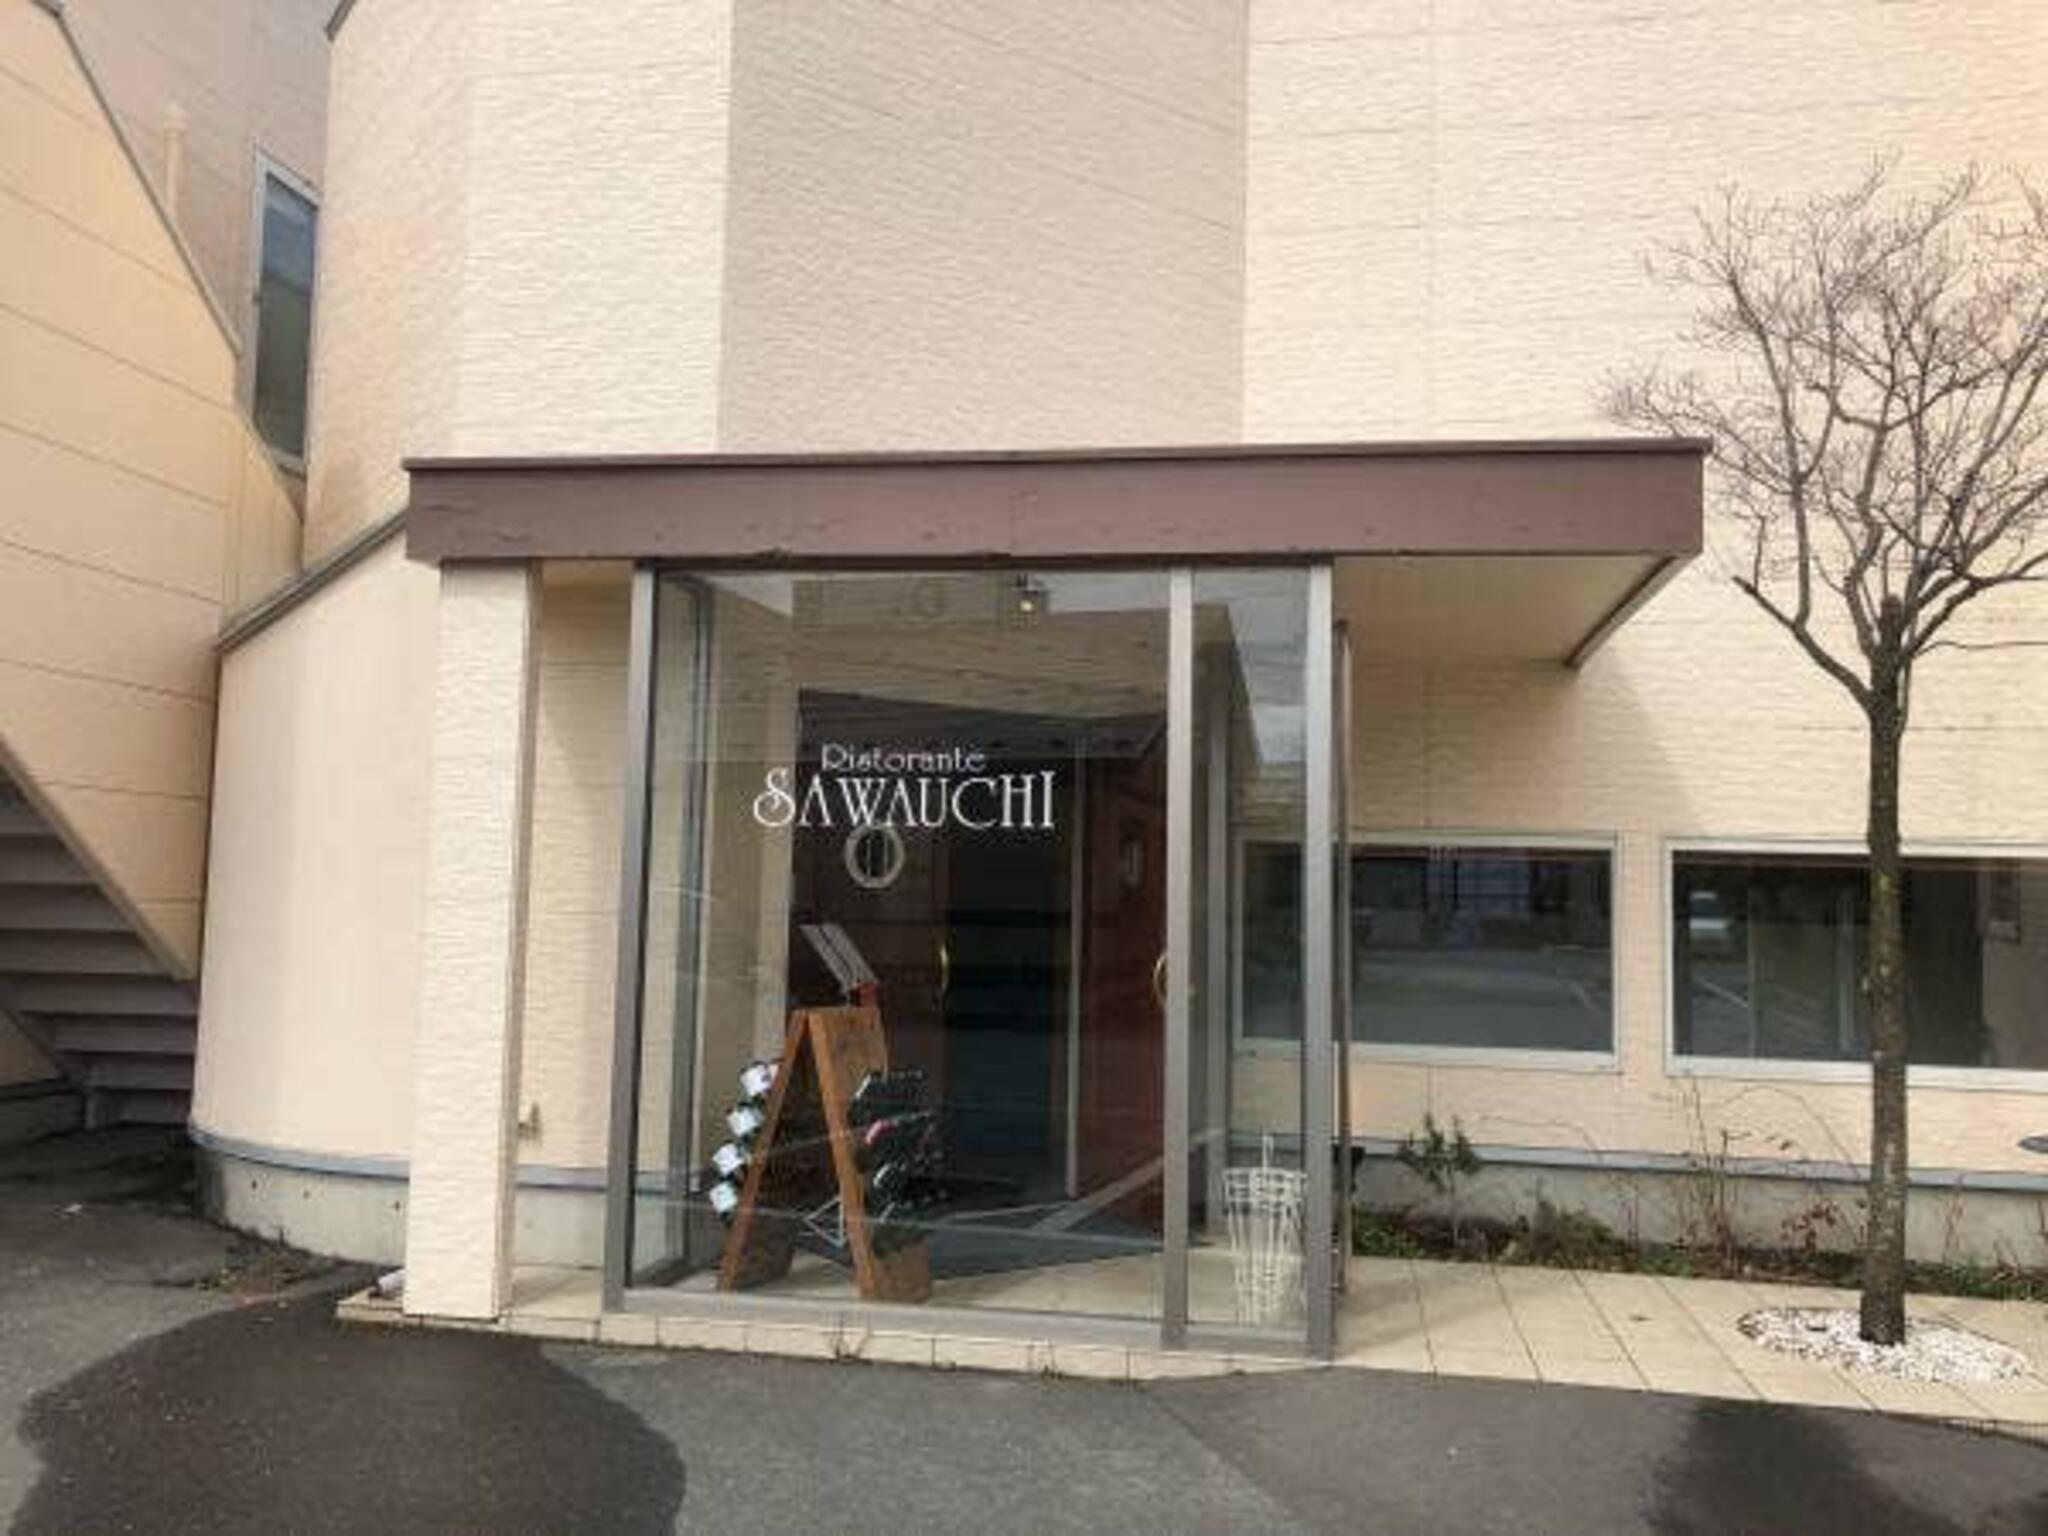 SAWAUCHI Deli & Restaurantの代表写真2